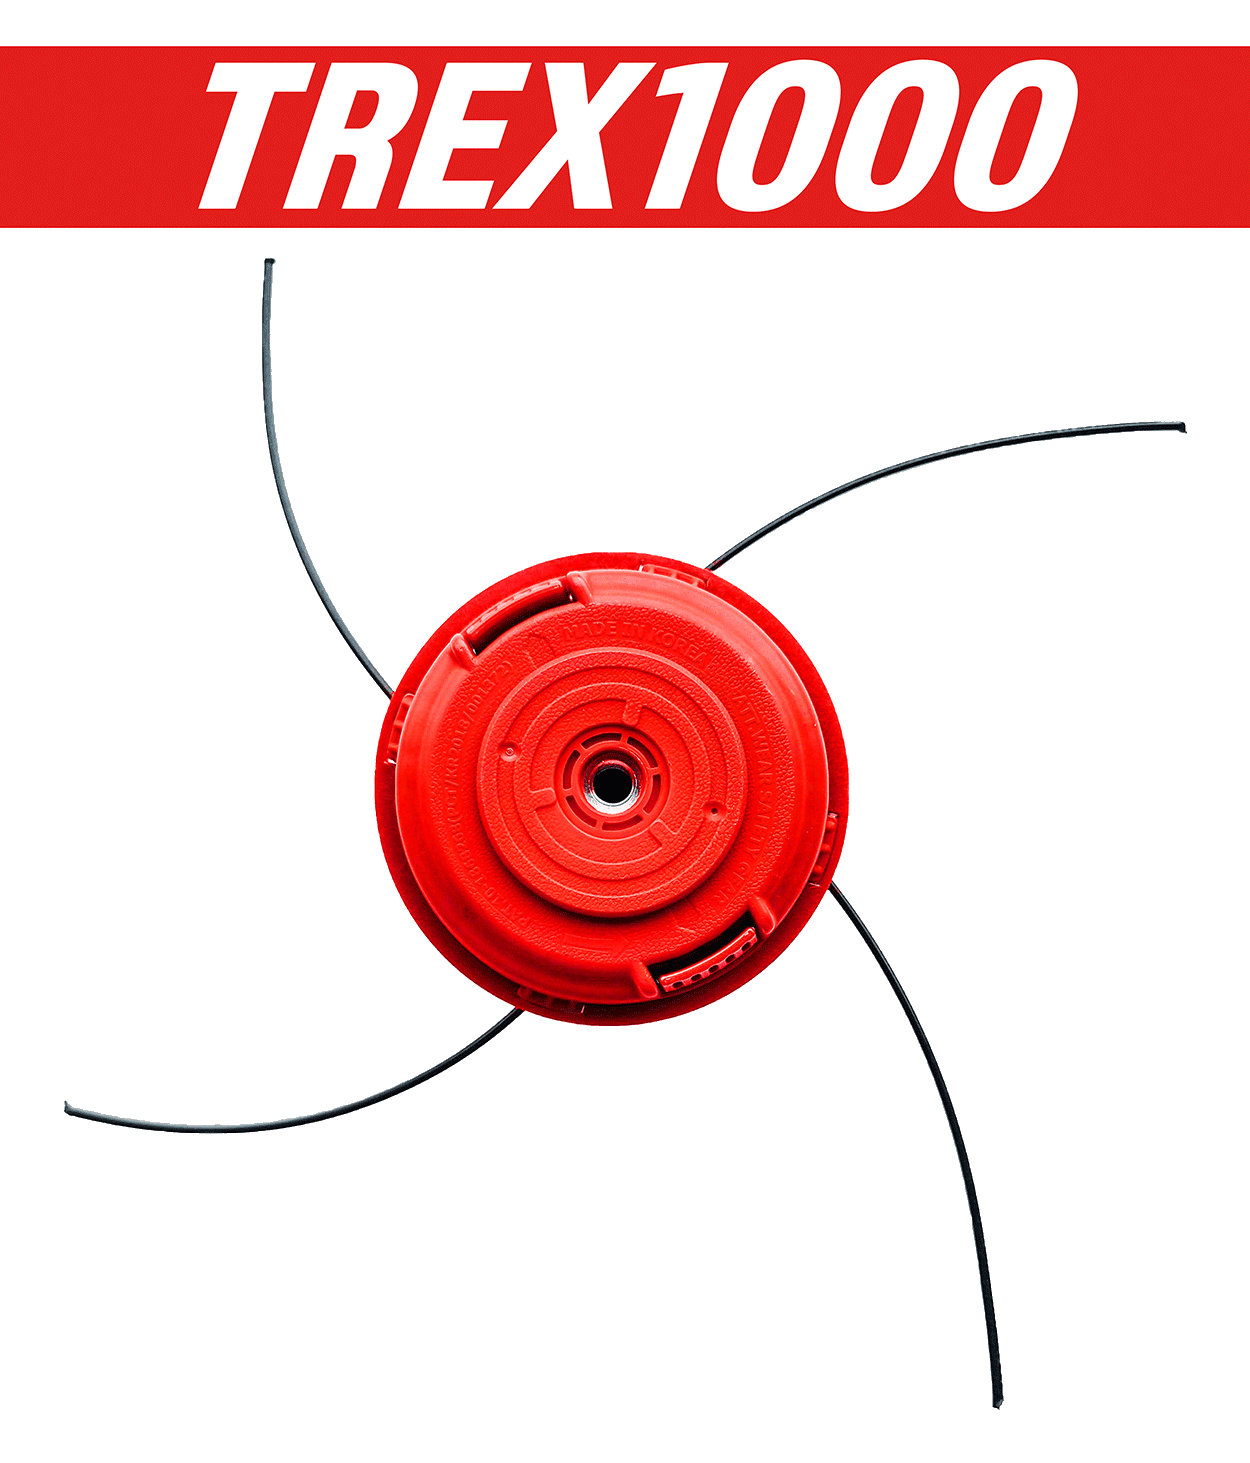 Four-String Trimmer Head (Stihl) | Pro Series | TREX1000 (STIHL) - TrailerRacks.com